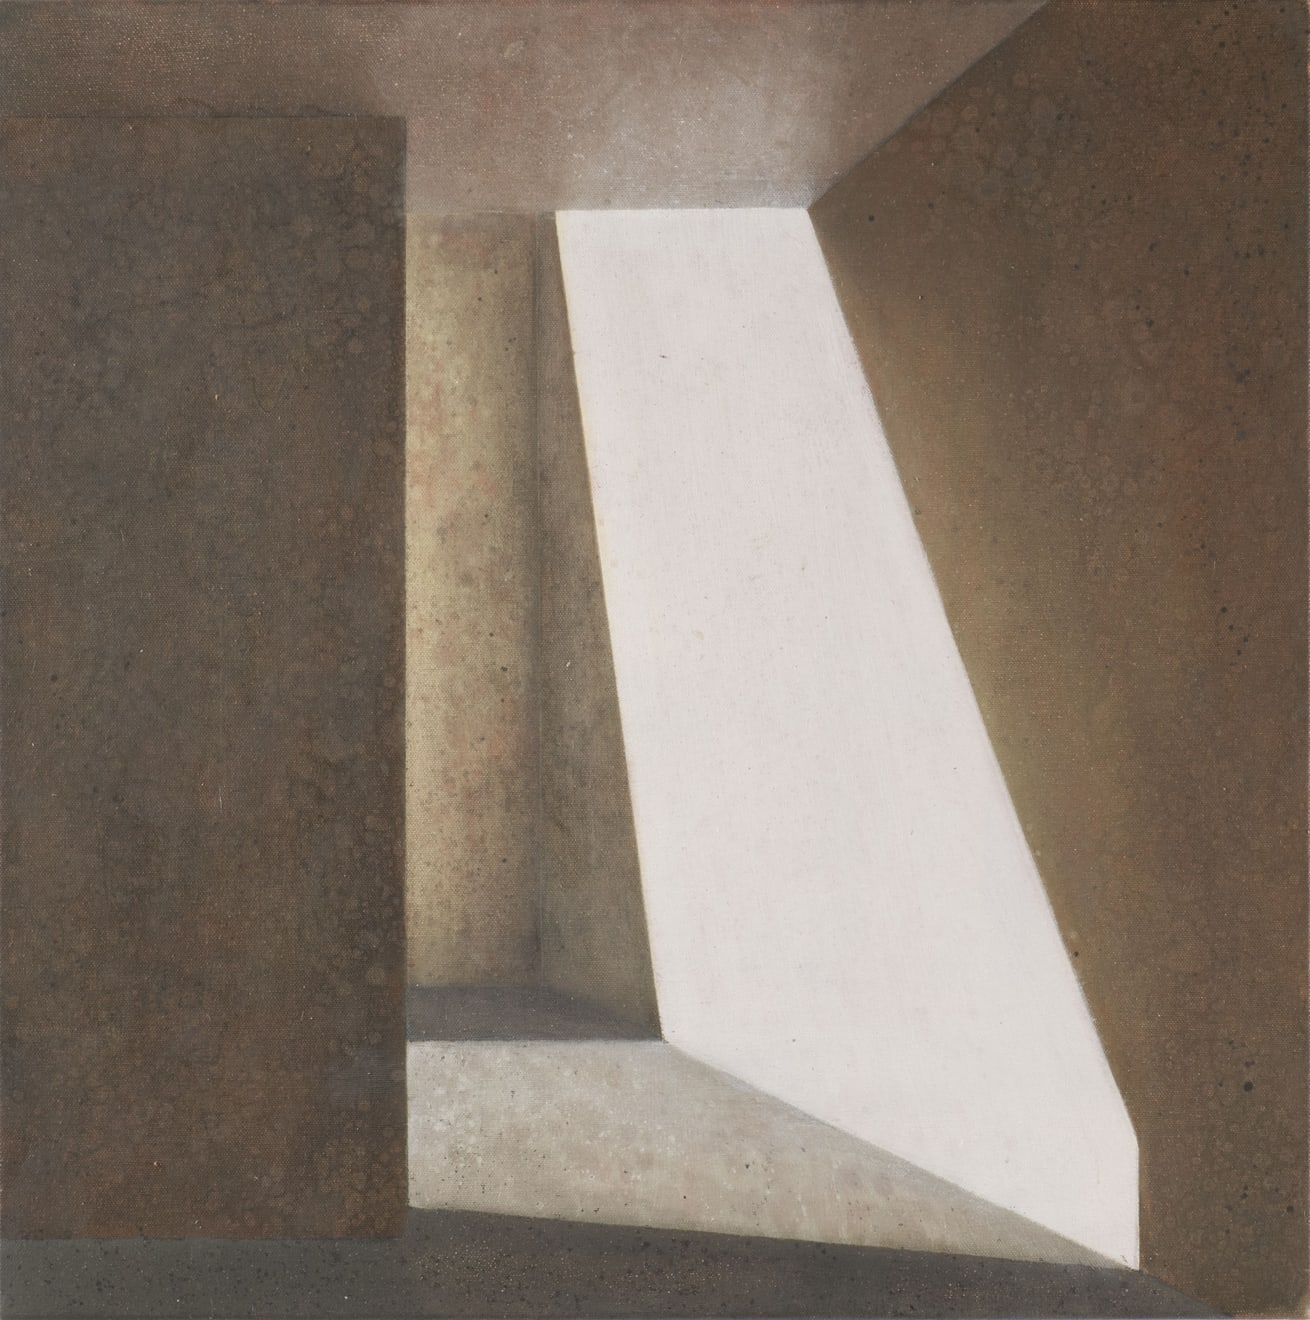 Resurrection (Yumebutai) Oil on Canvas Shadow Box Frame 61 x 61 cm $1800 SOLD